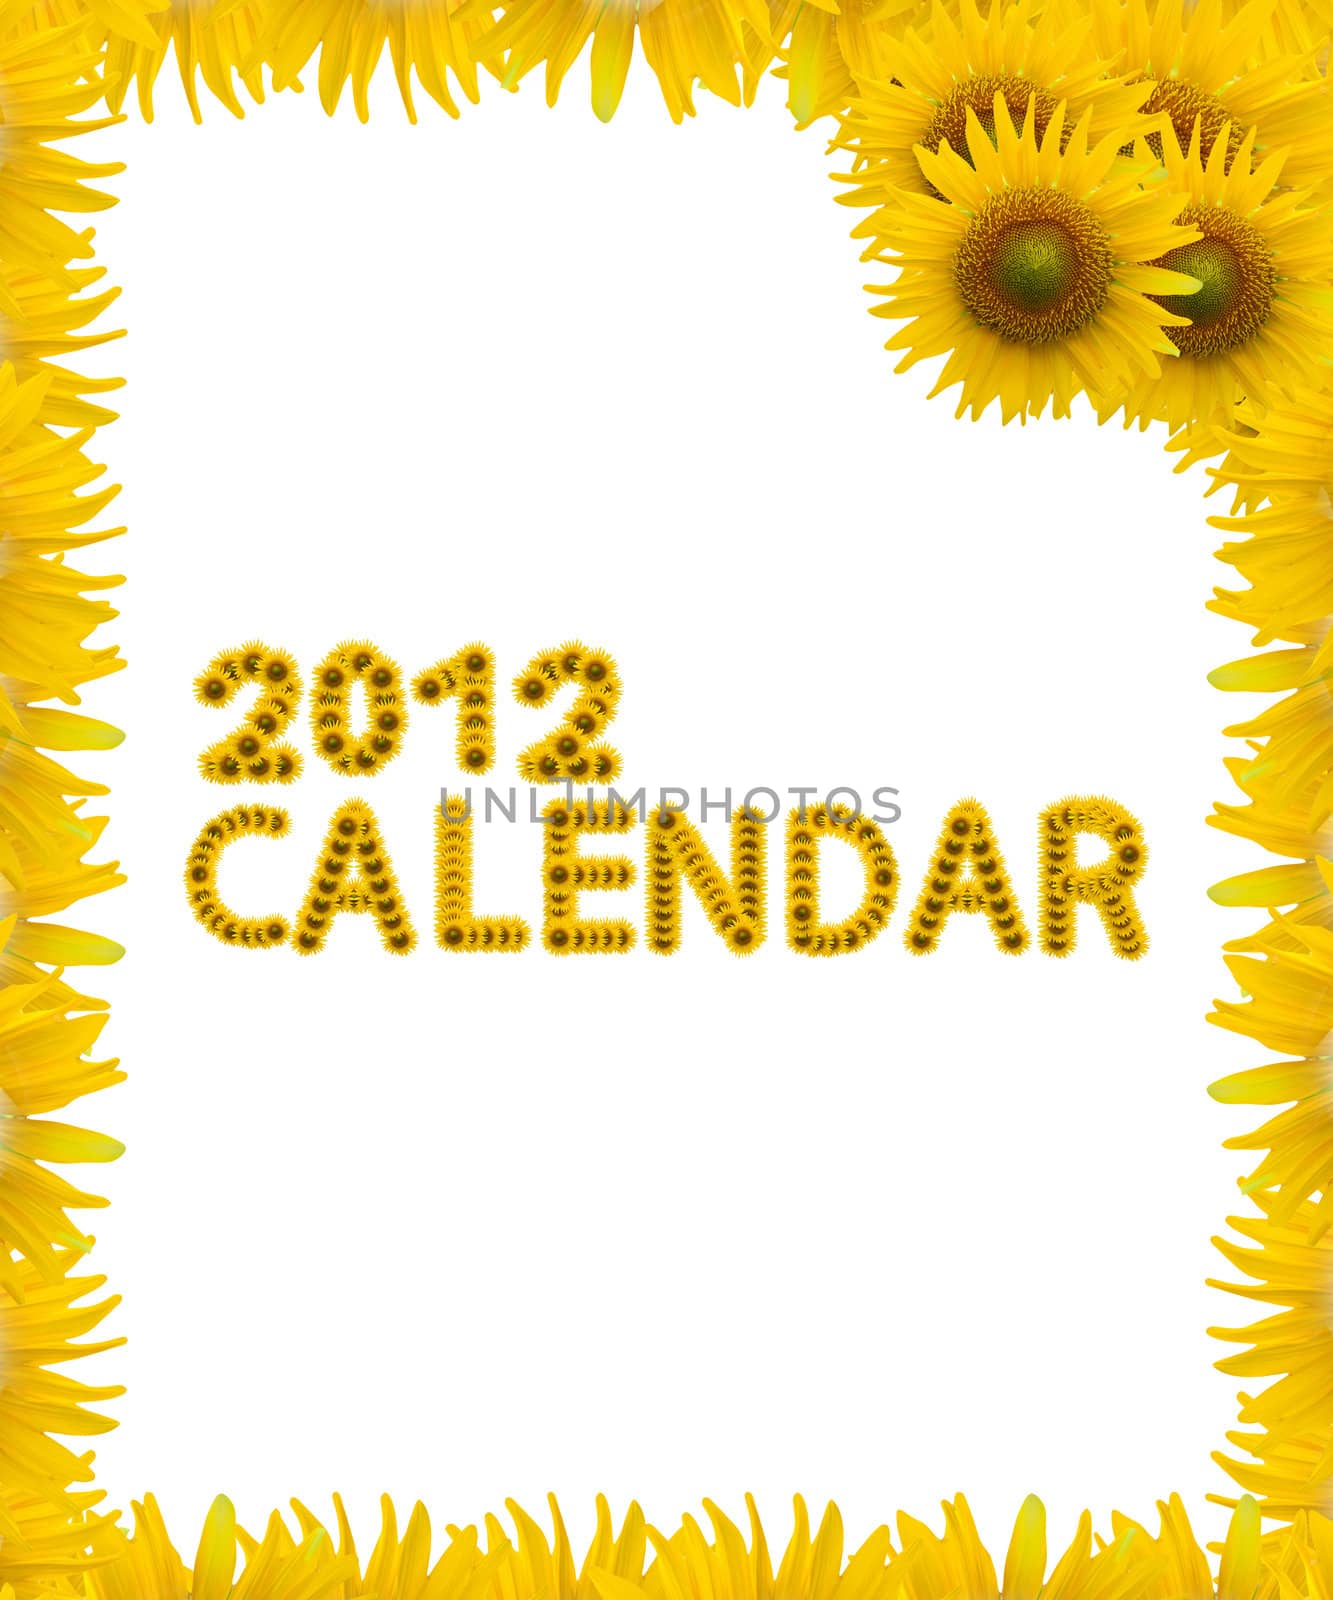 2012 year calendar with Sunflowerand  frame design by jakgree